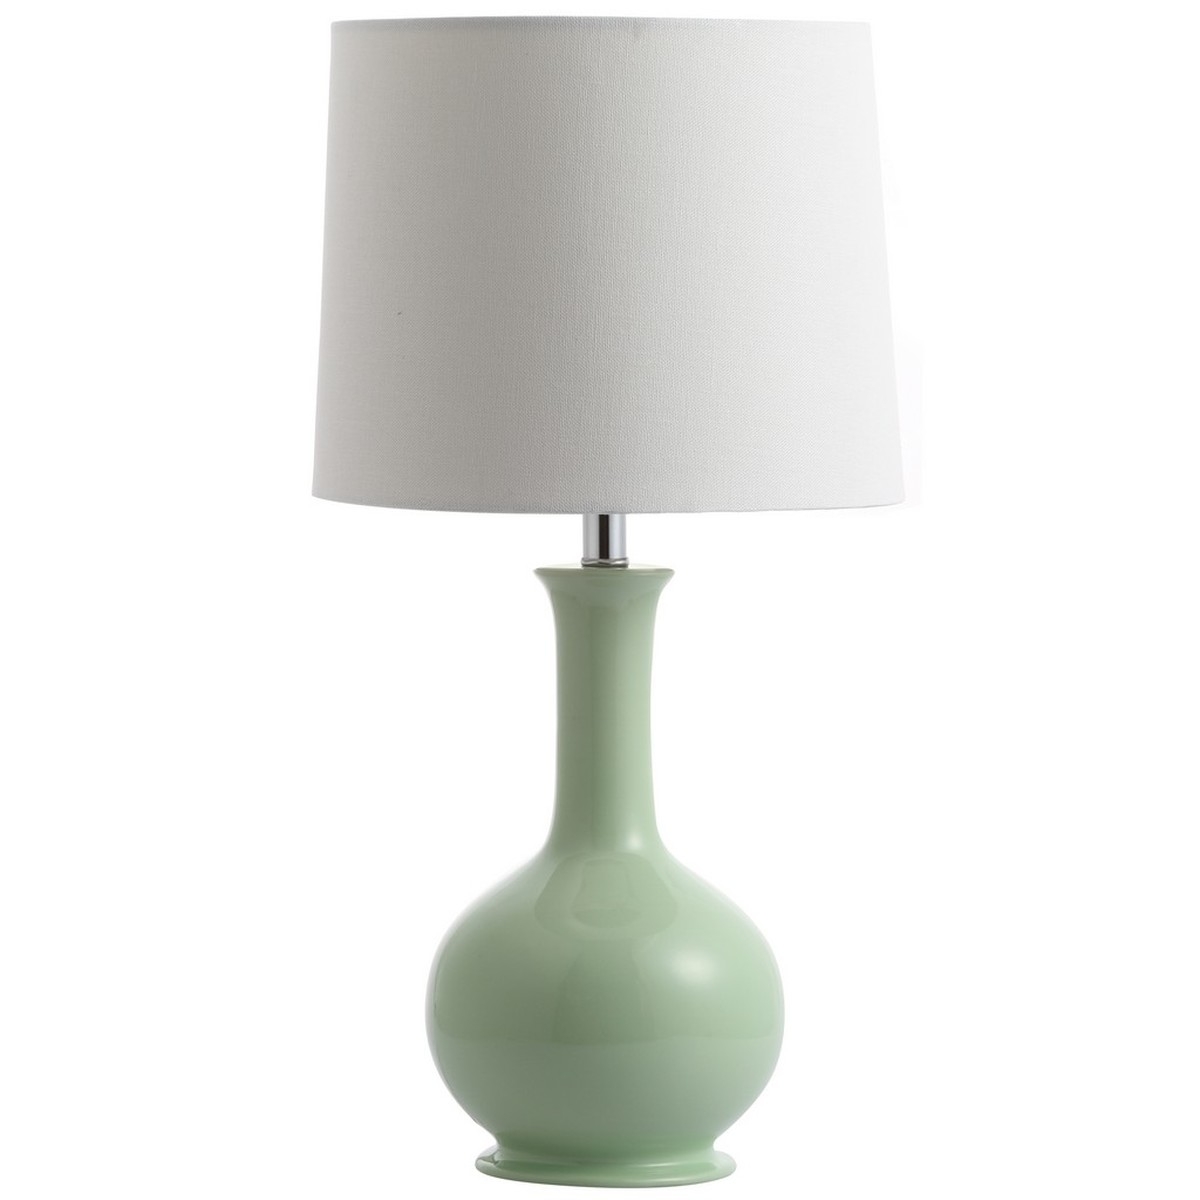 Minton Table Lamp - Light Green - Safavieh - Image 0